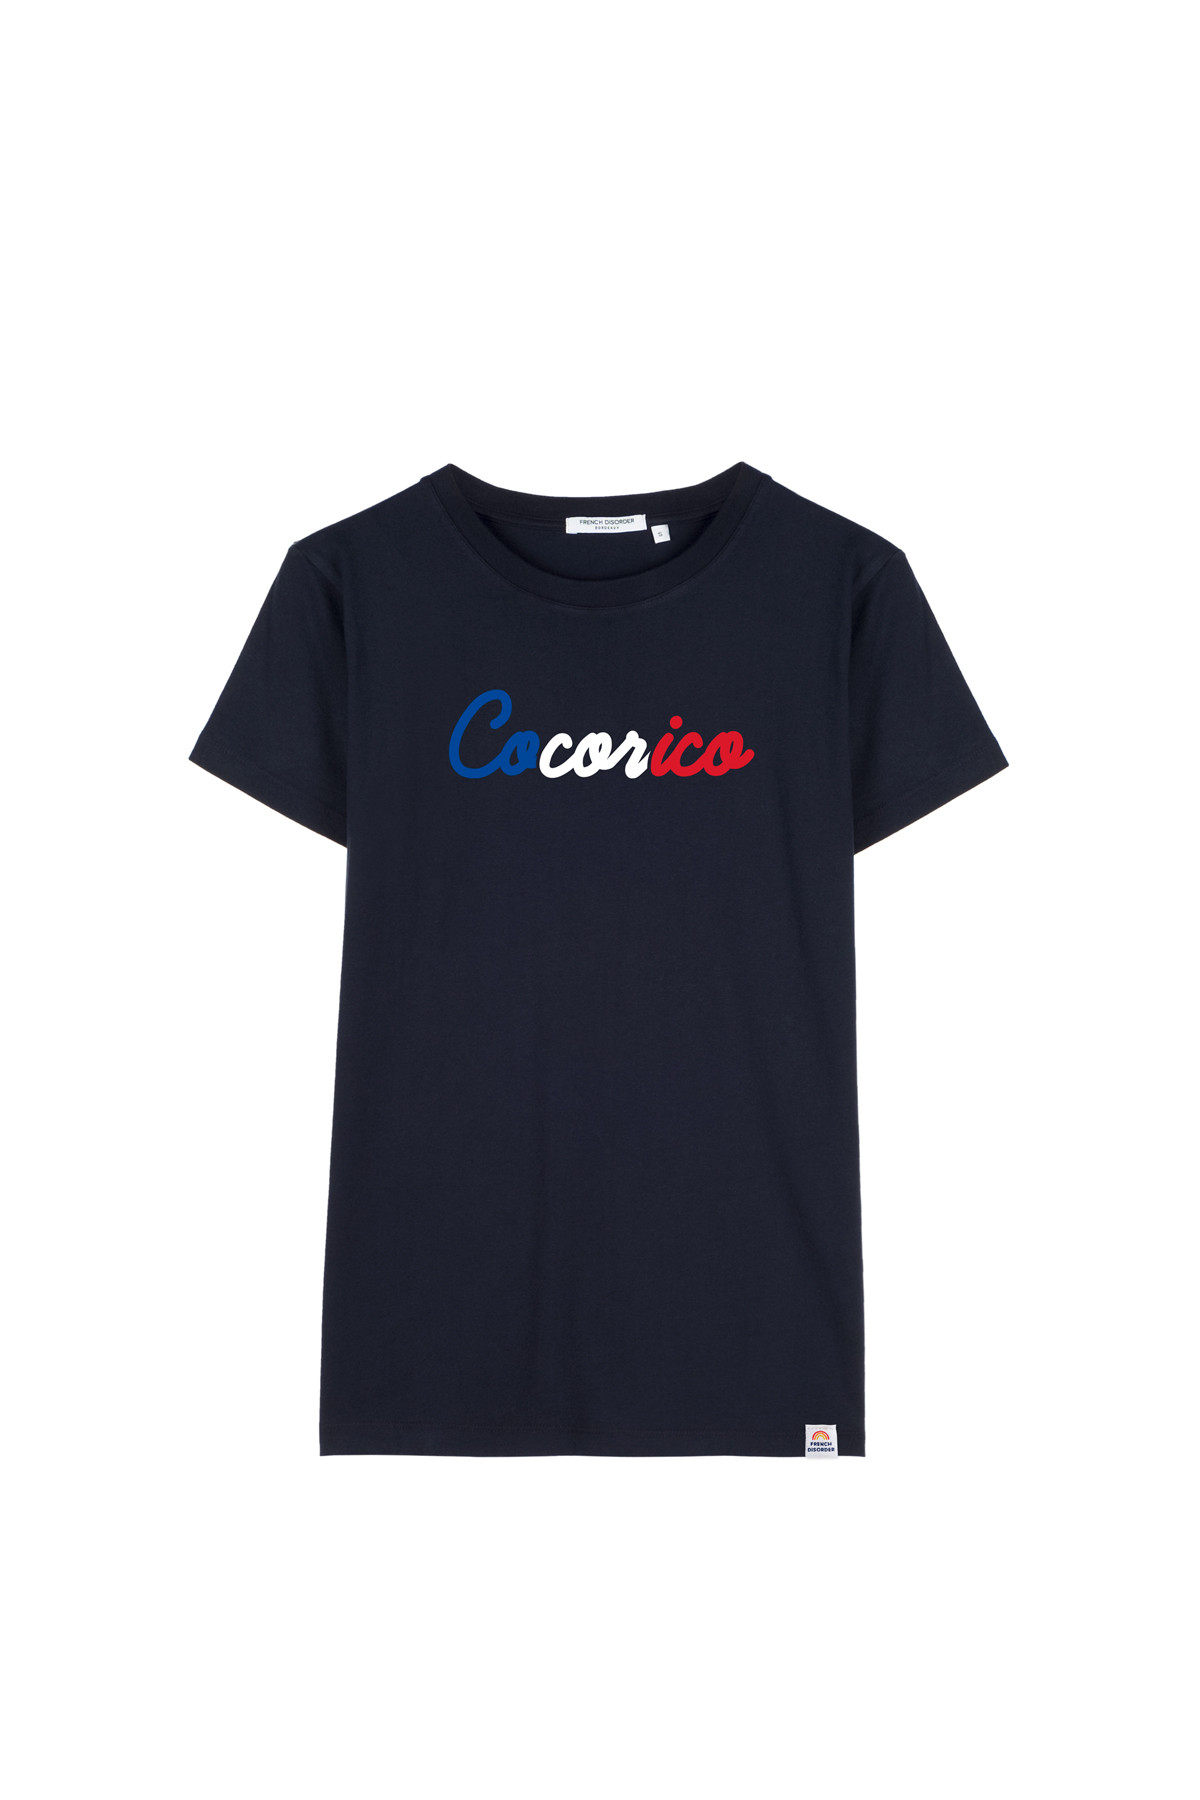 Photo de T-SHIRTS COL ROND Tshirt COCORICO chez French Disorder